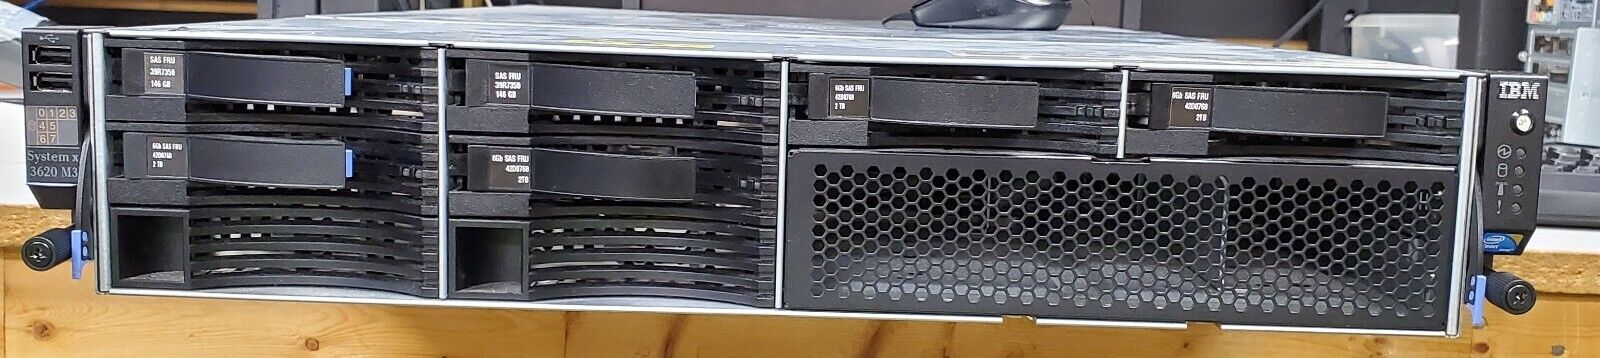 IBM System X3620 M3 Server